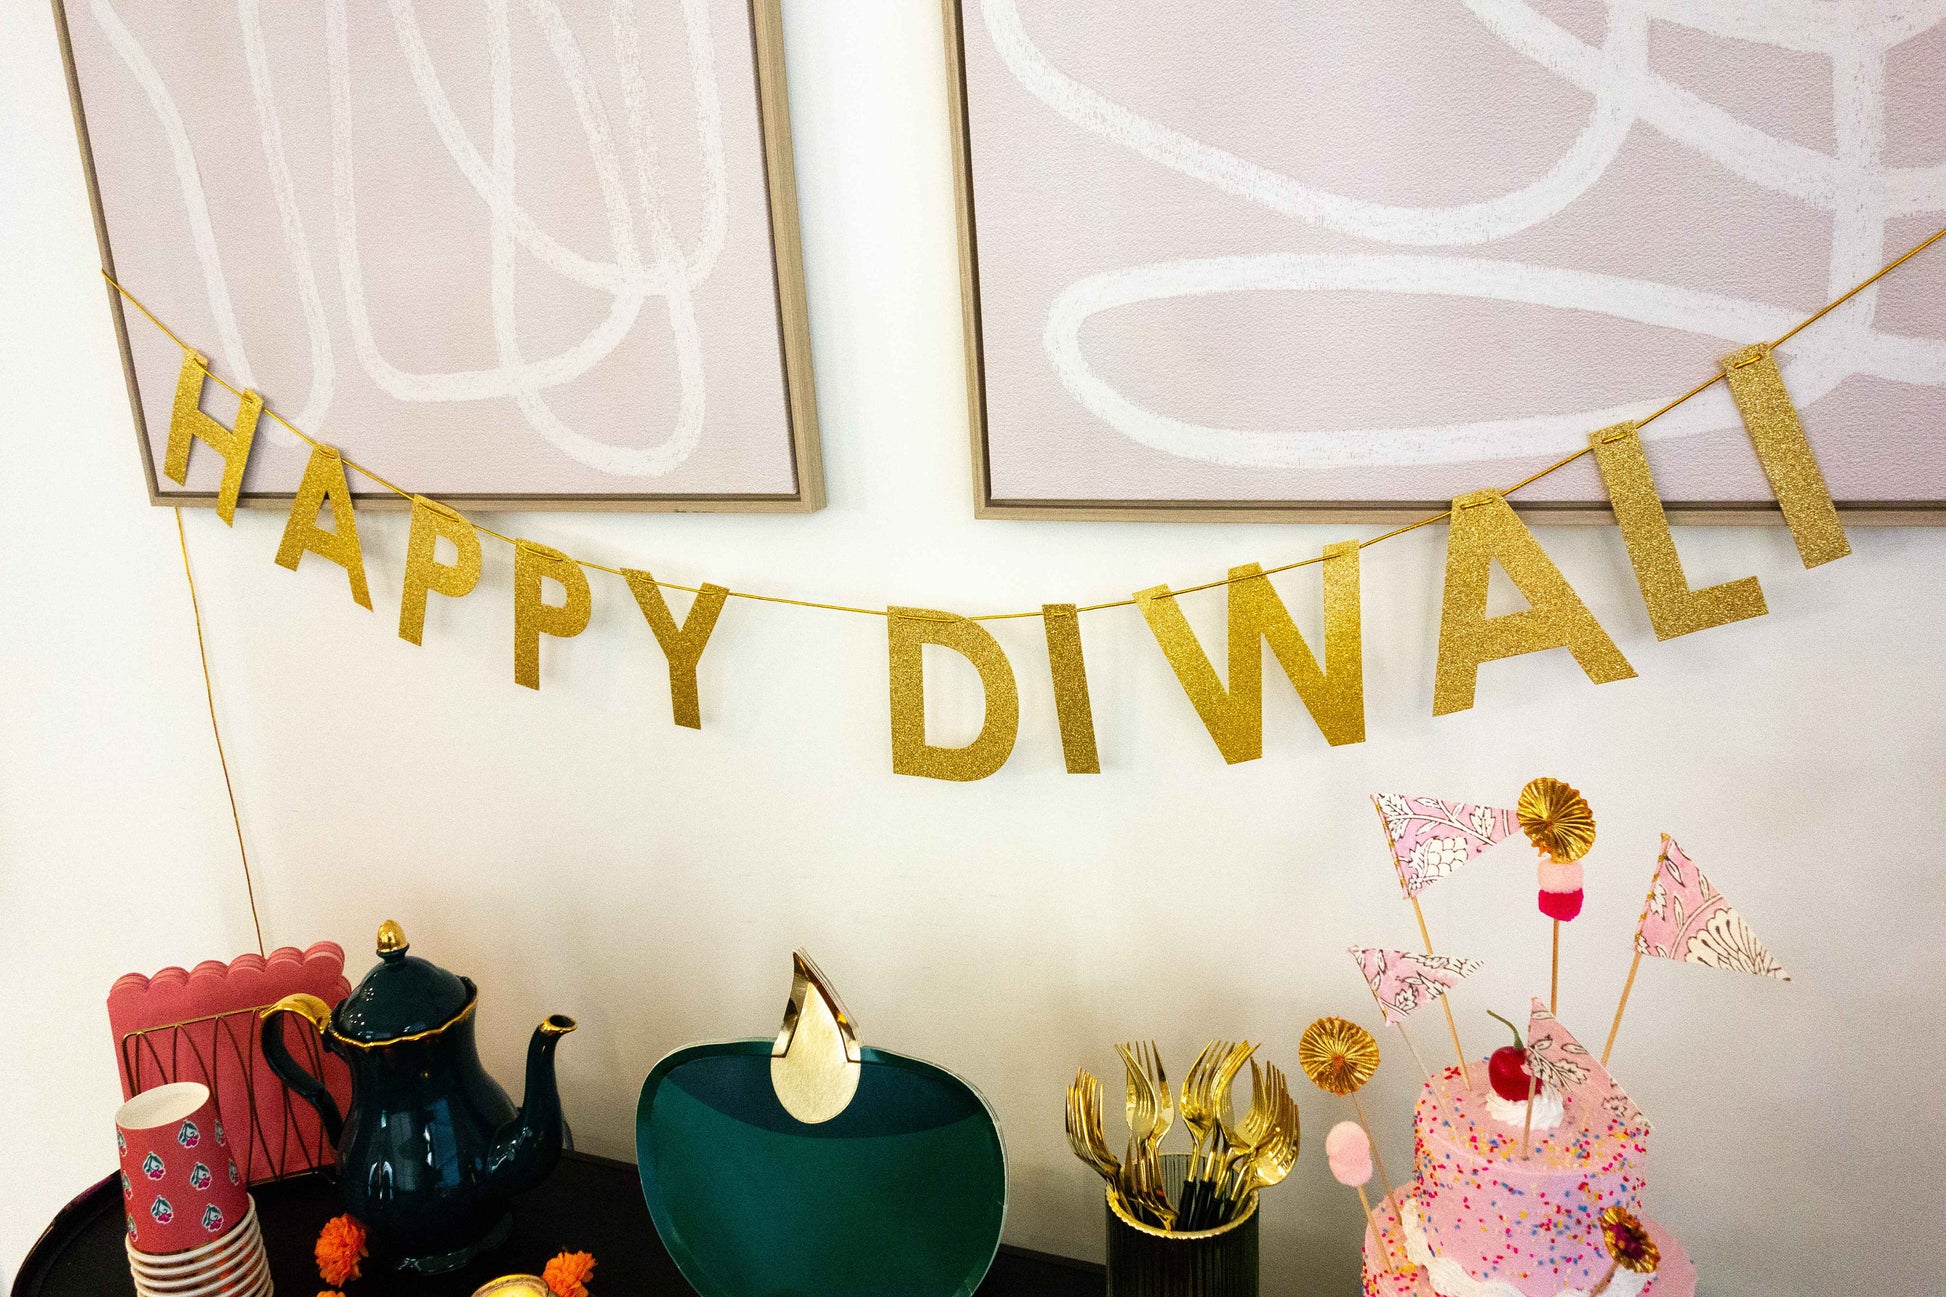 Happy Diwali banner hanging over dessert and tea table